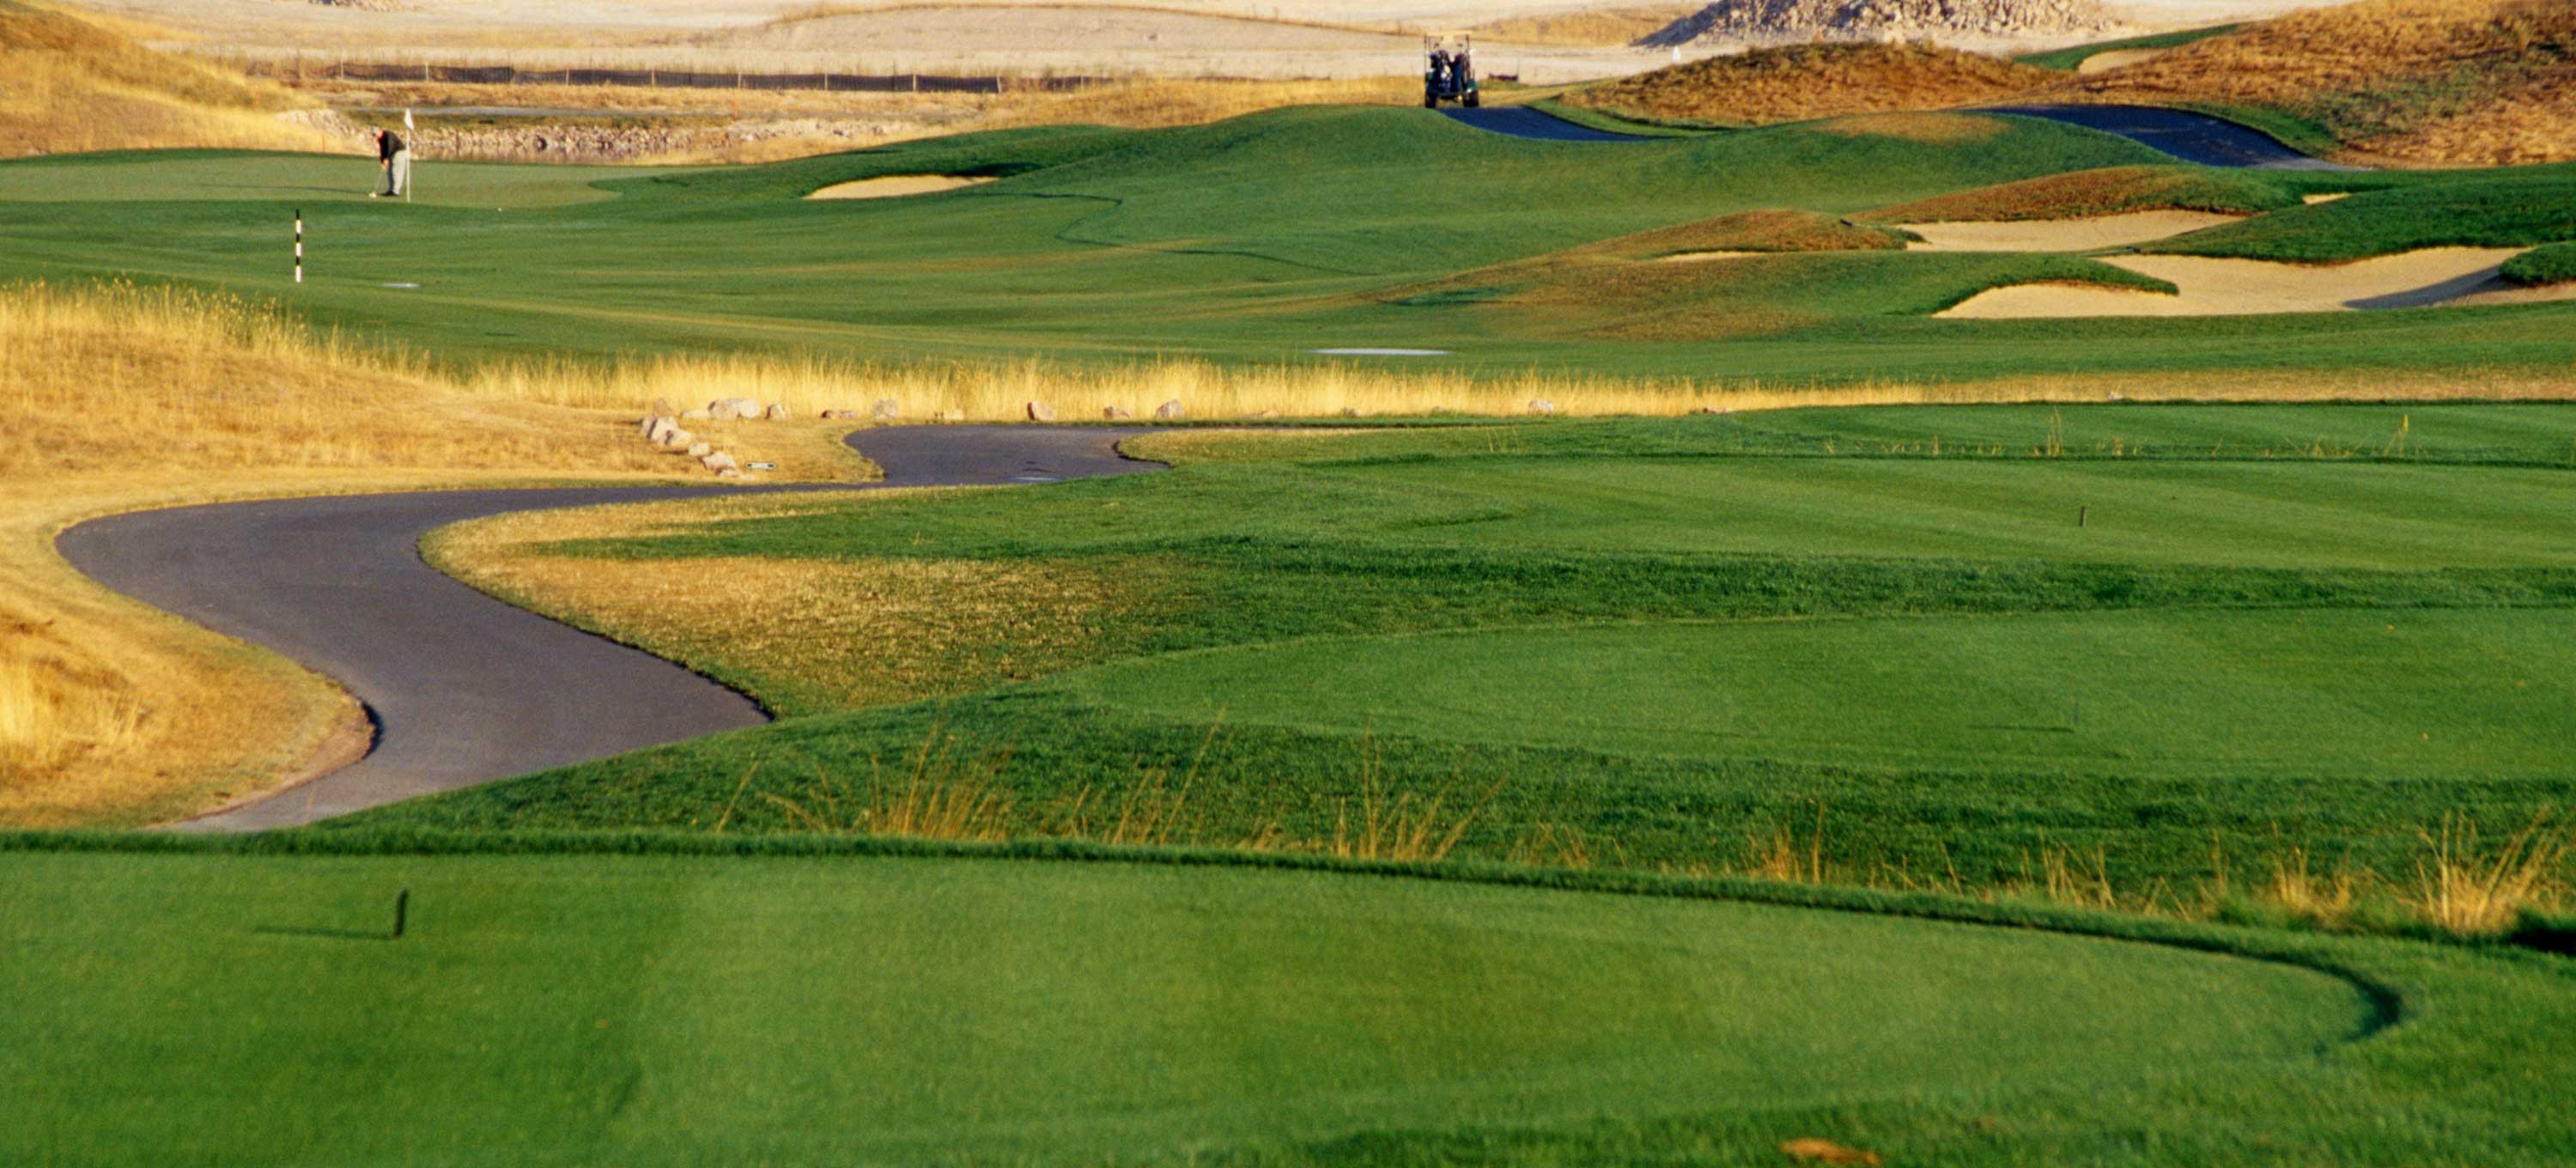 golf course Image